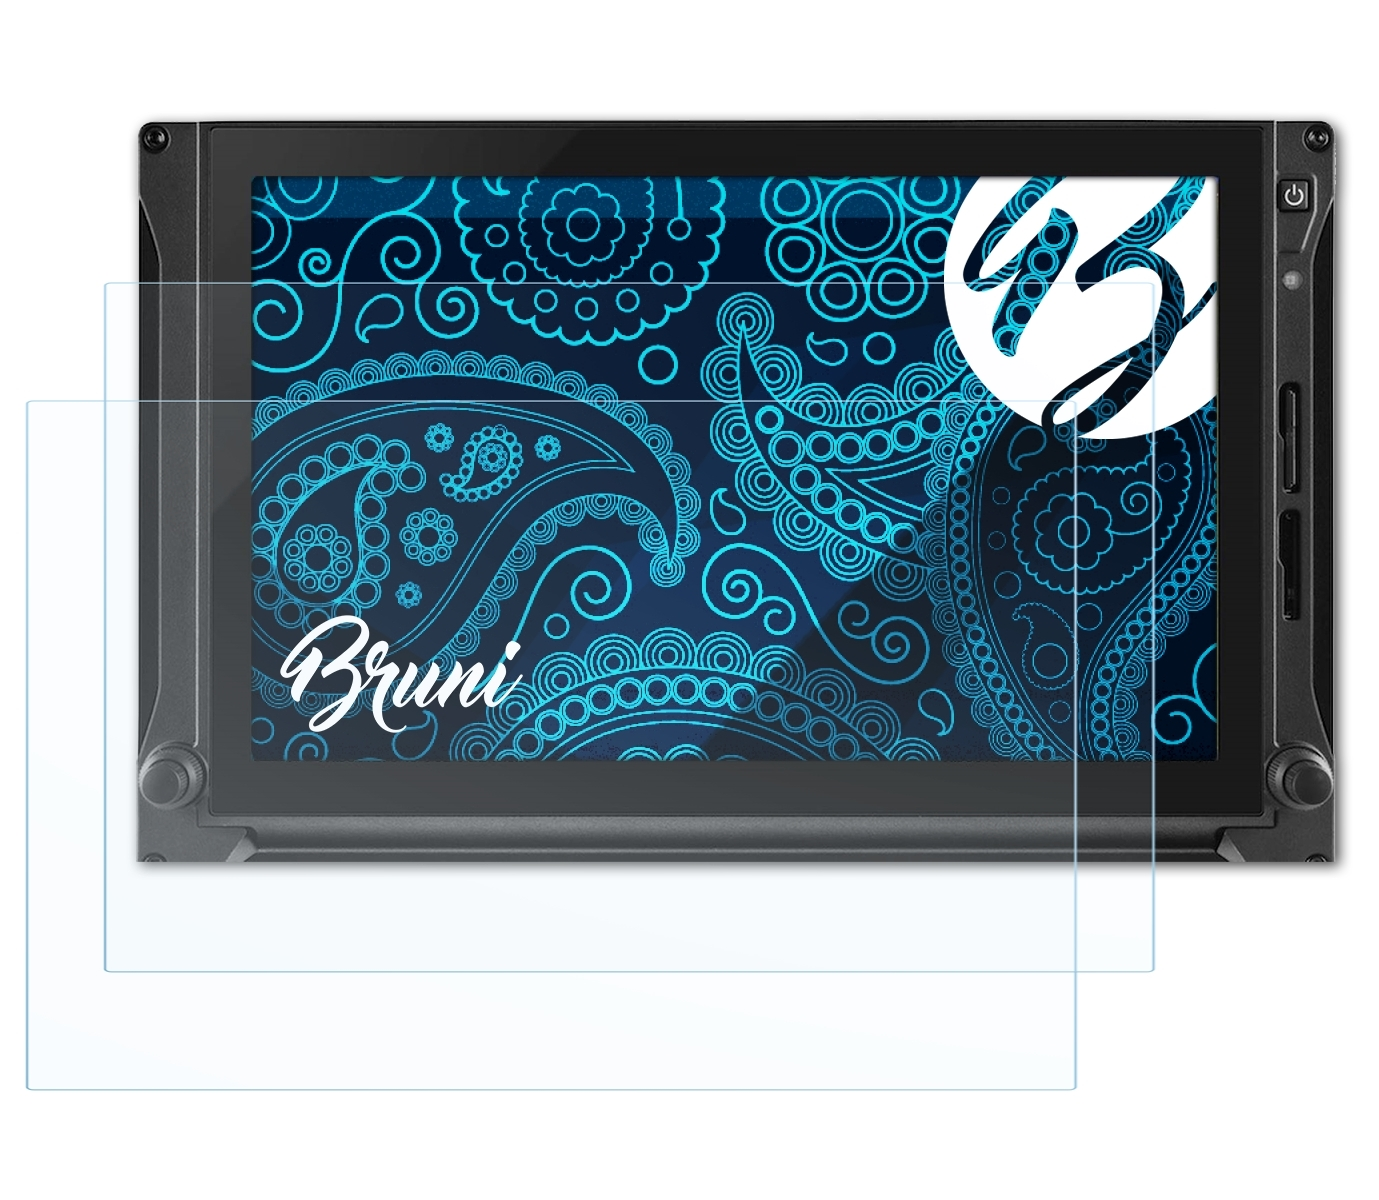 BRUNI 2x Basics-Clear Inch)) Garmin TXi (10.6 G500 Schutzfolie(für